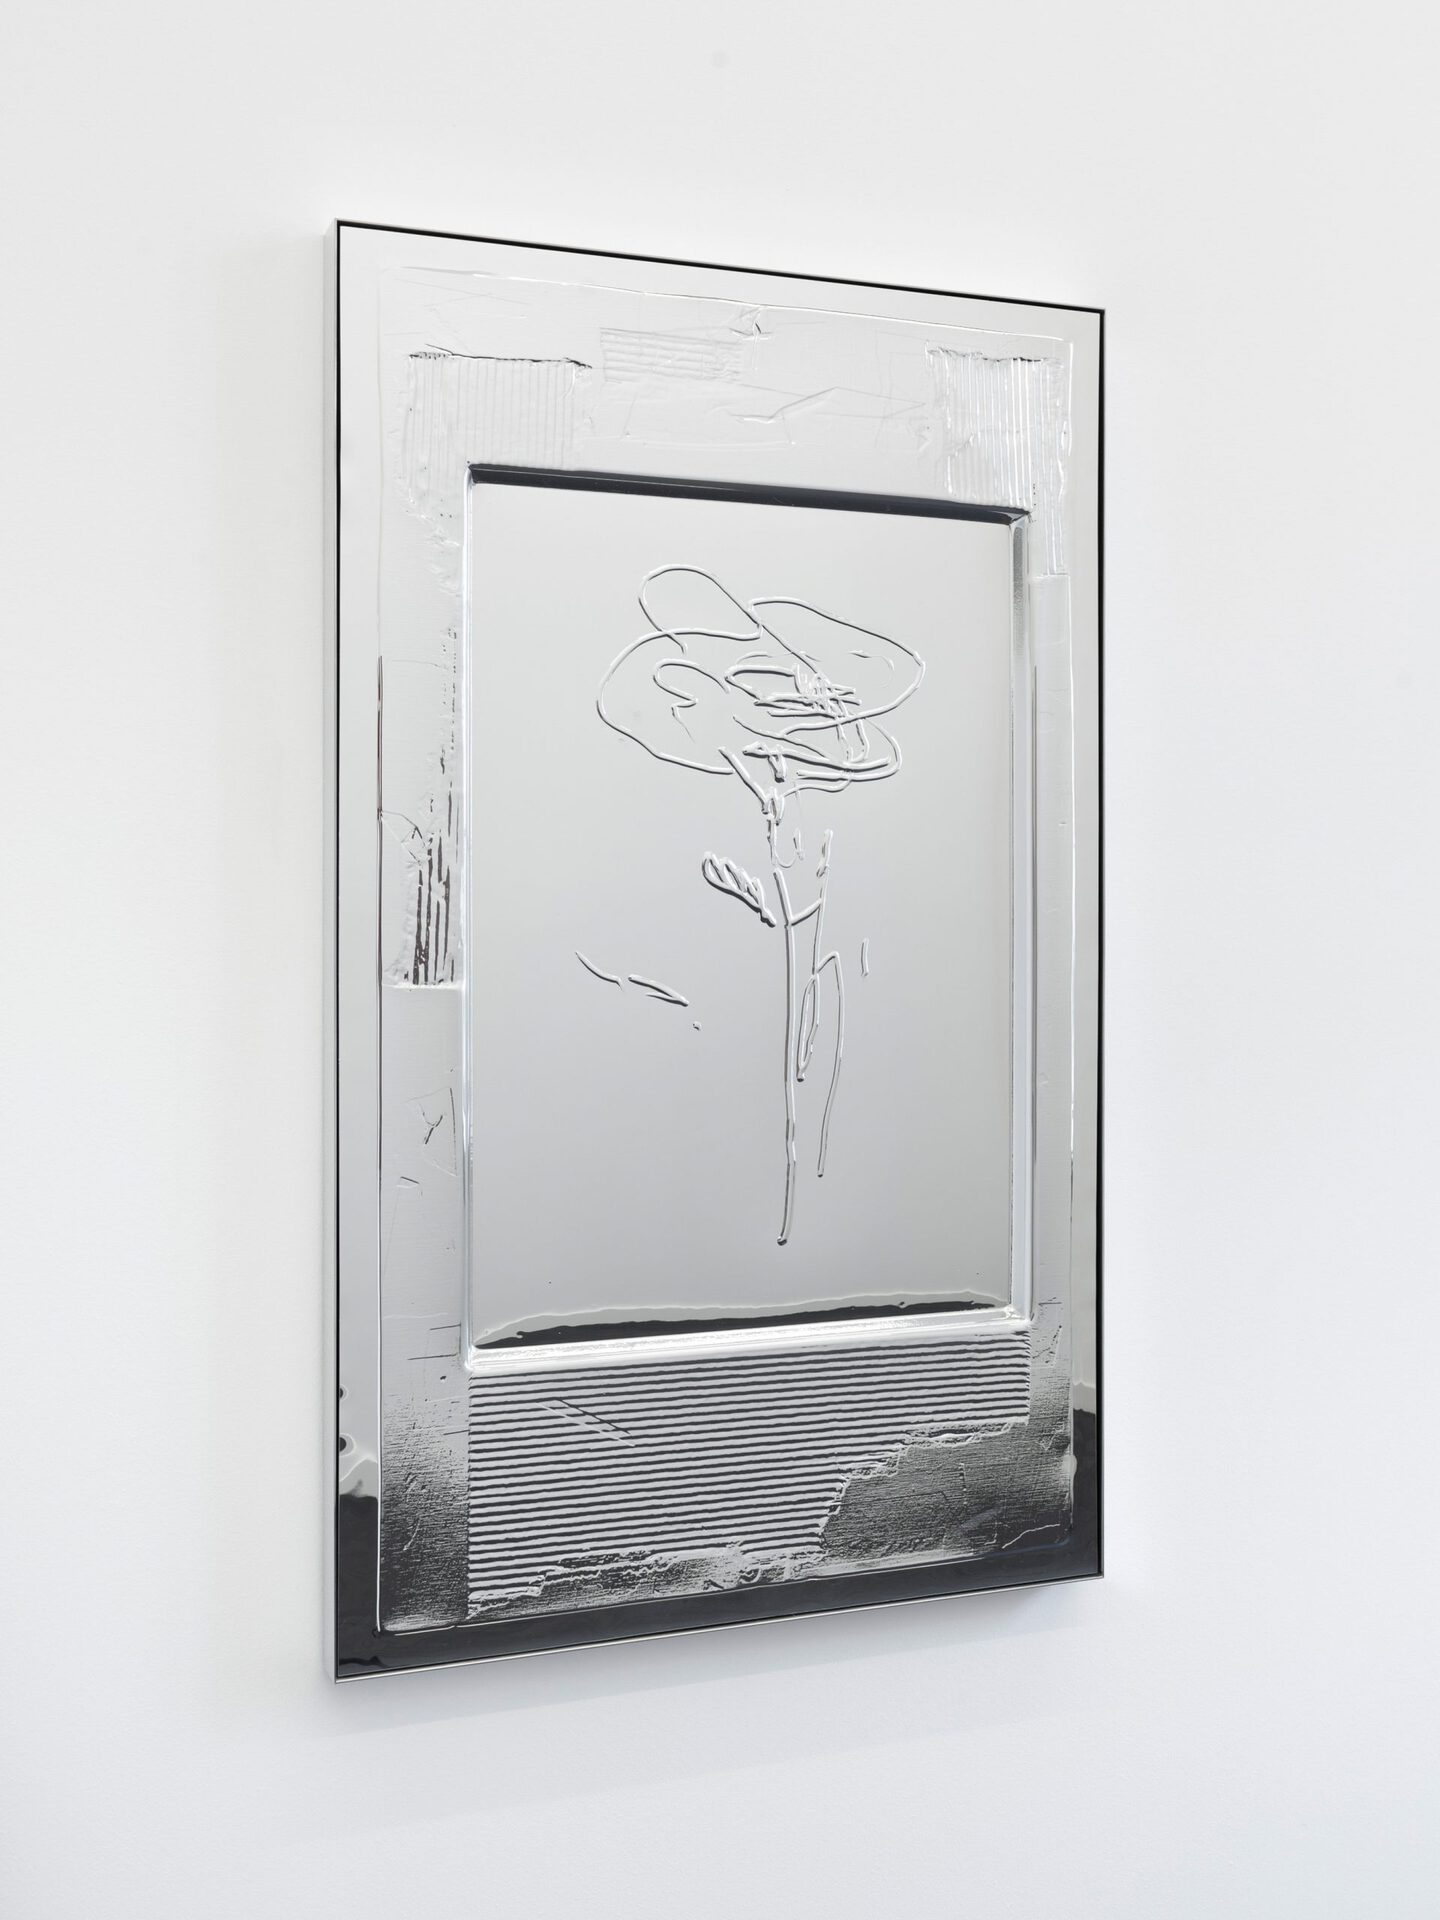 Hannah Sophie Dunkelberg, LAUREL 1325, 2022, polysterne, polished aluminium frame, 100 x 60 x 4 cm. Courtesy of the artist and Gunia Nowik Gallery.